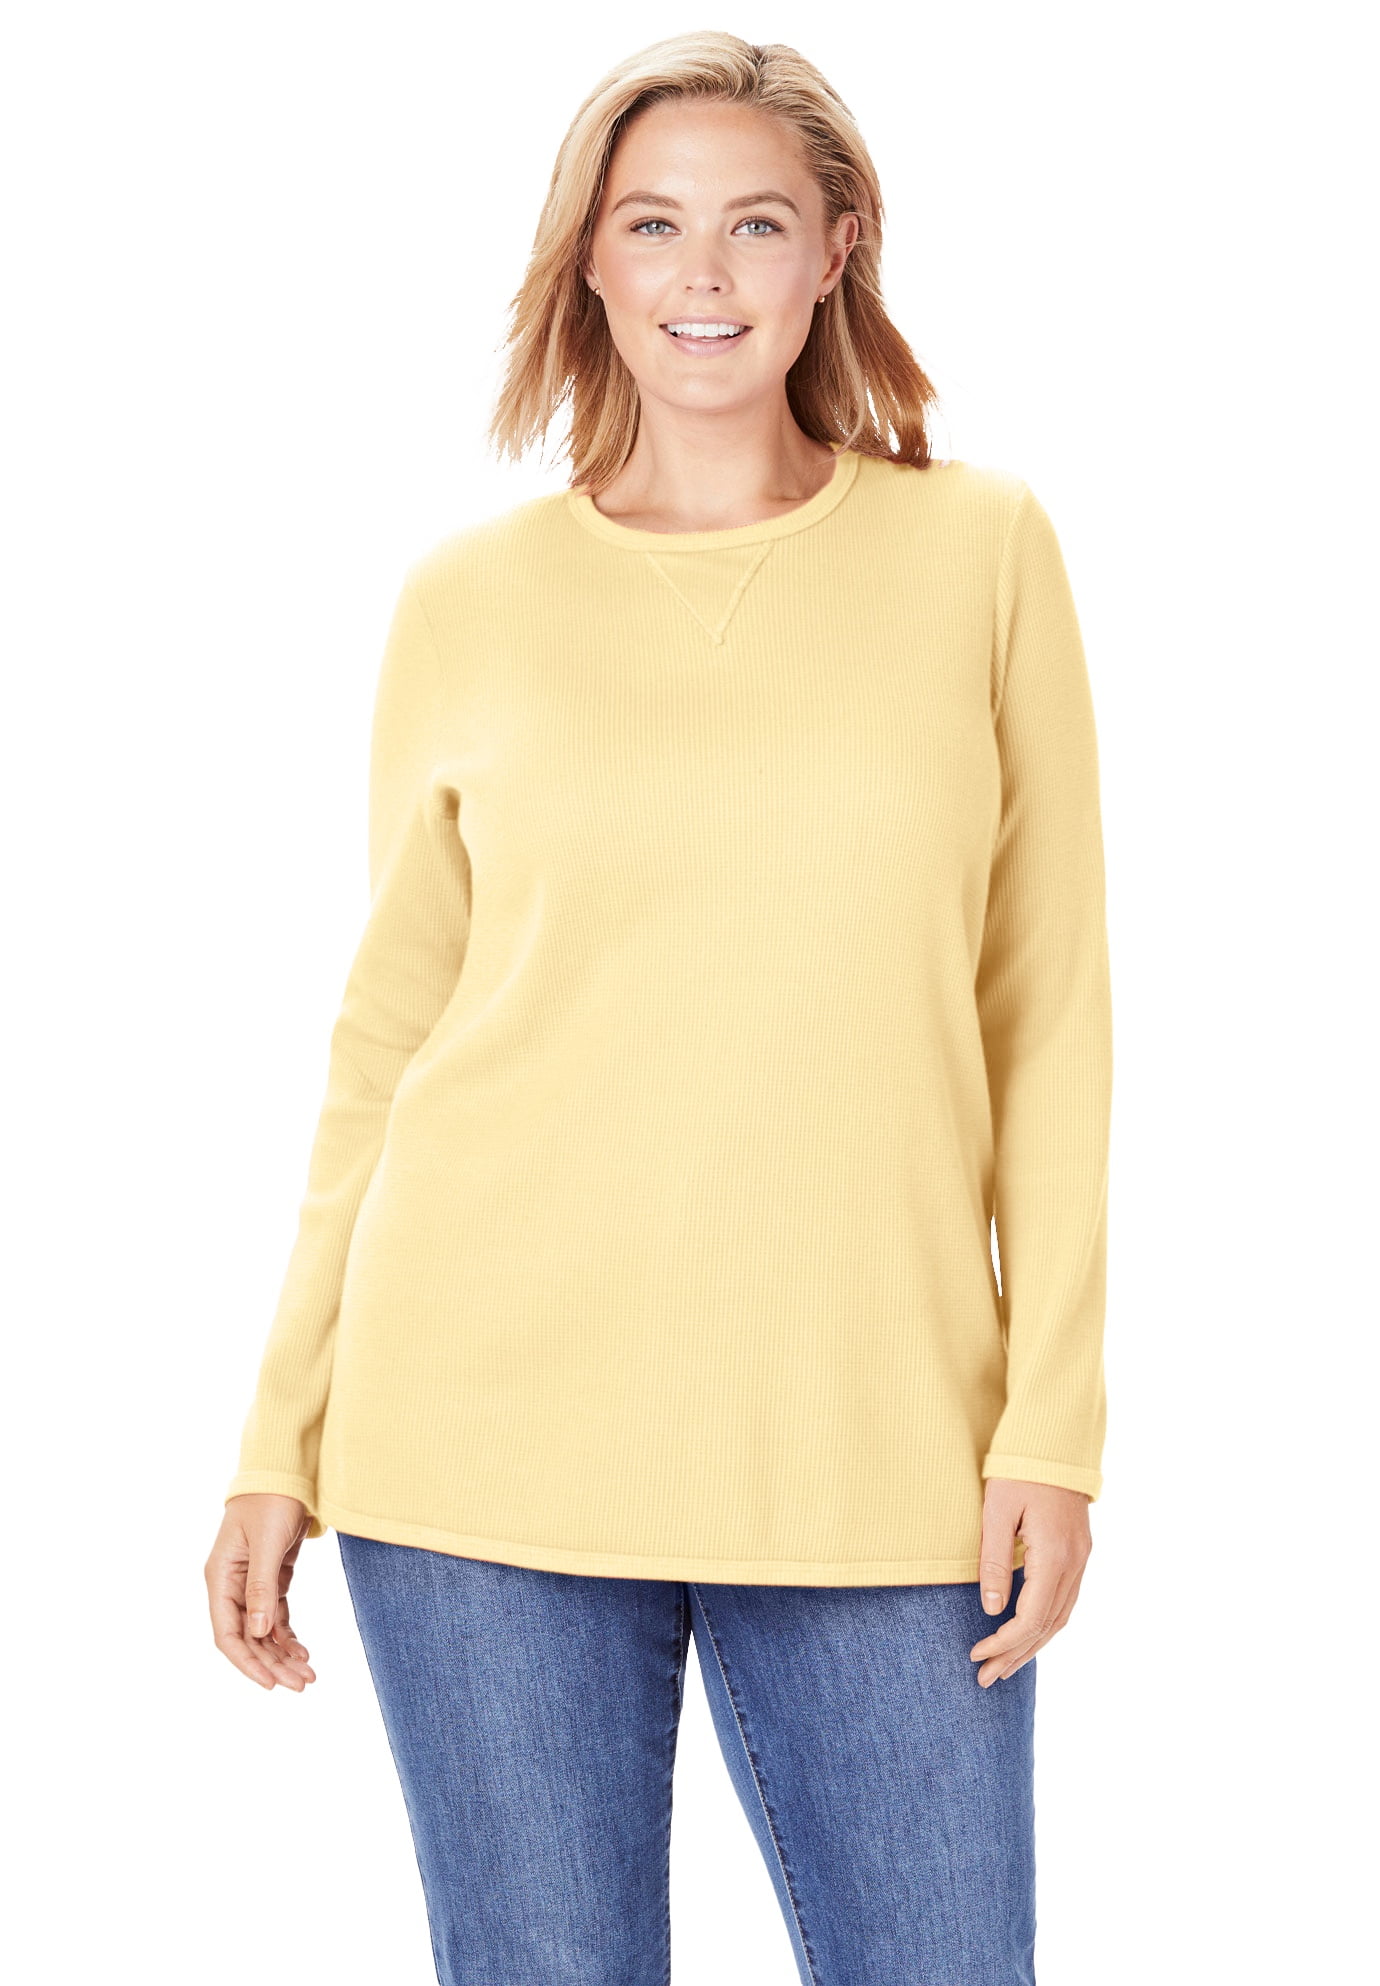 Woman Within Women's Plus Size Thermal Sweatshirt - Walmart.com